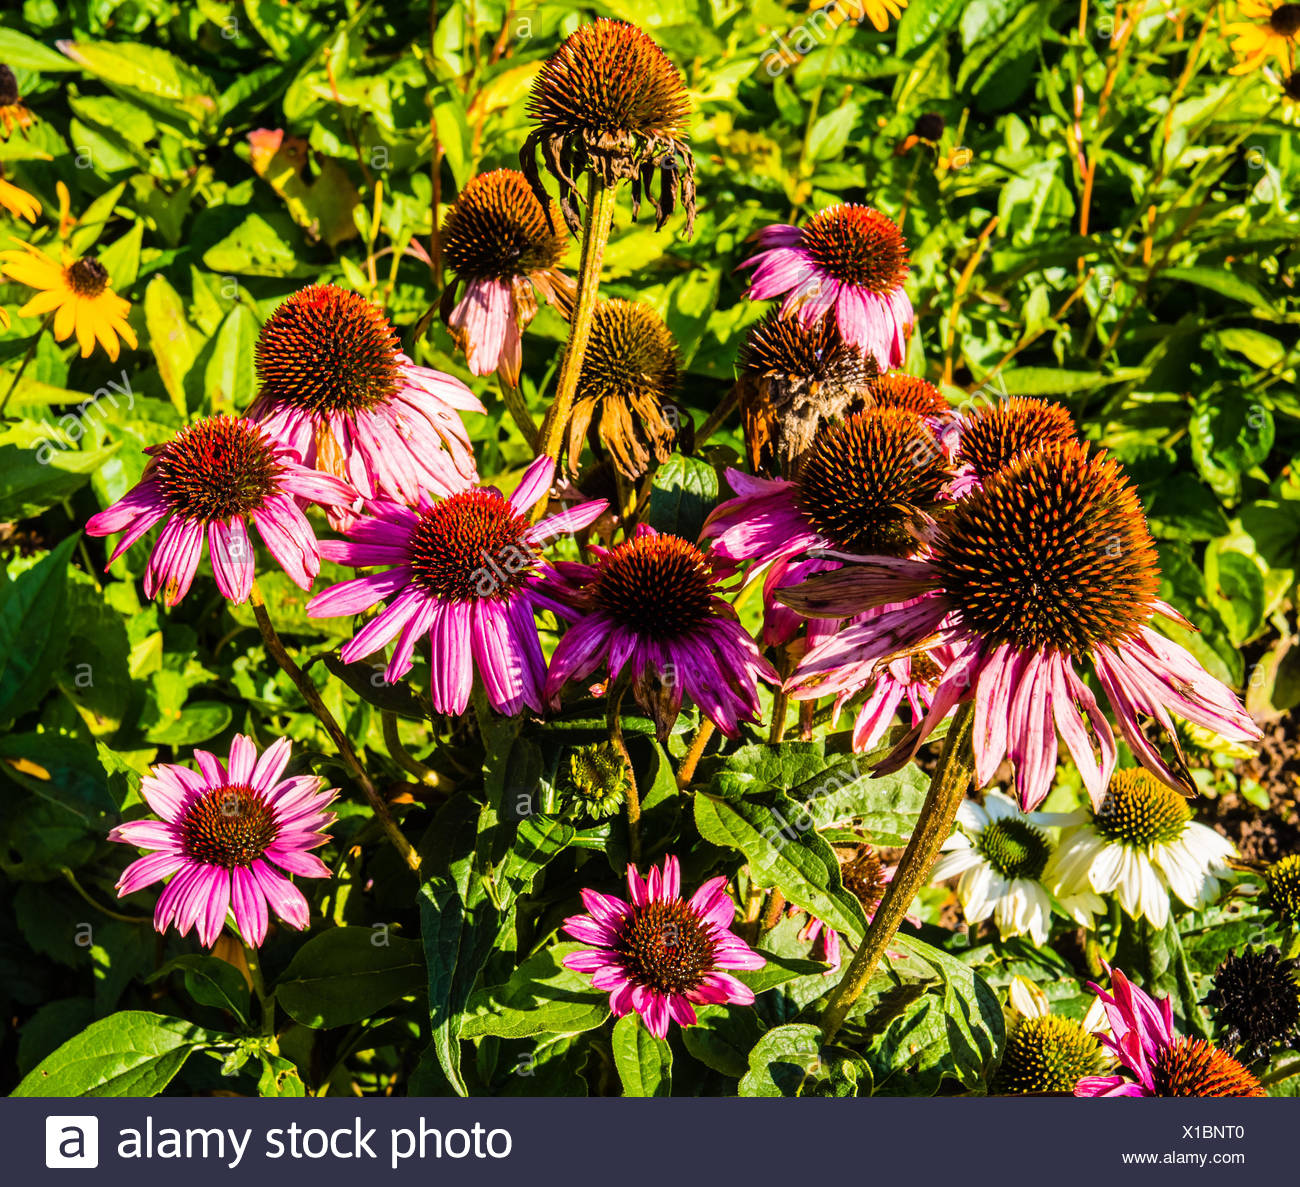 plant, flower, flowers, blossoms, late summer, shrub, sun shade